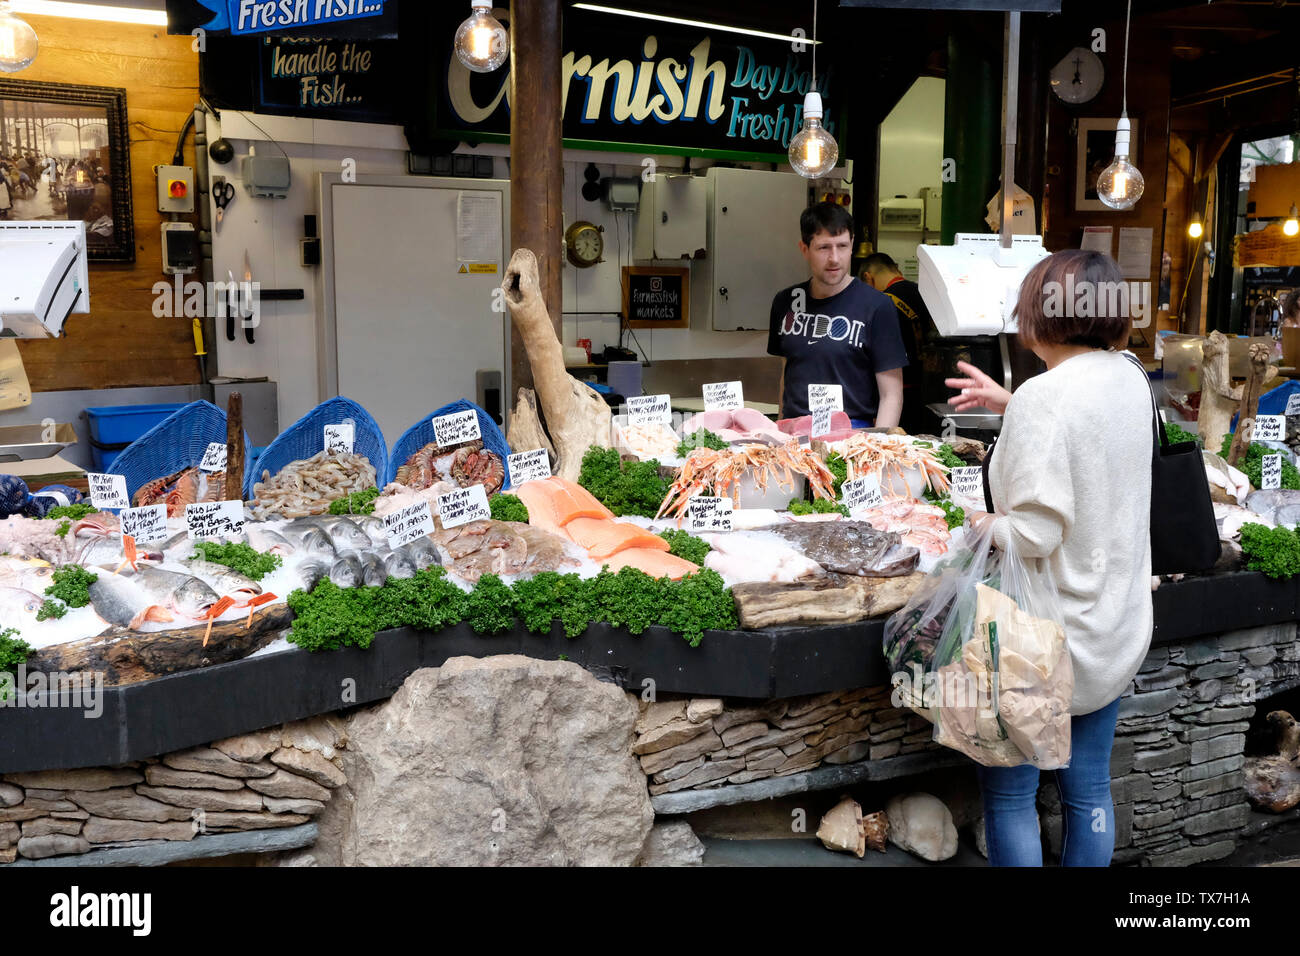 A stall selling fish, Borough market, London Stock Photo